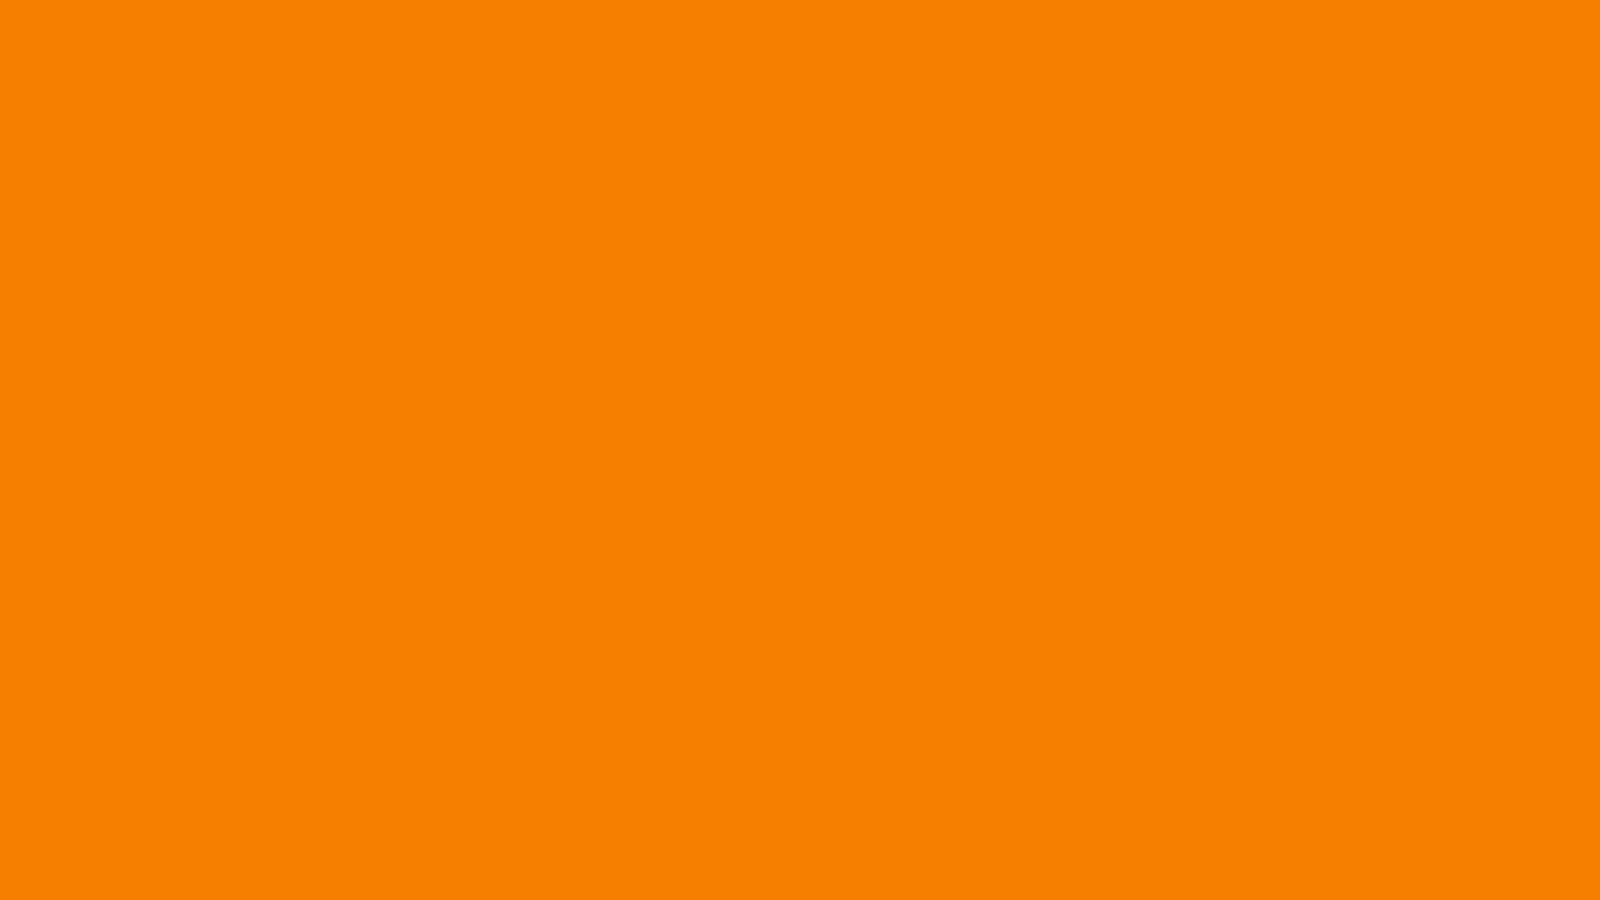 University Of Tennessee Orange Solid Color Background Jpg